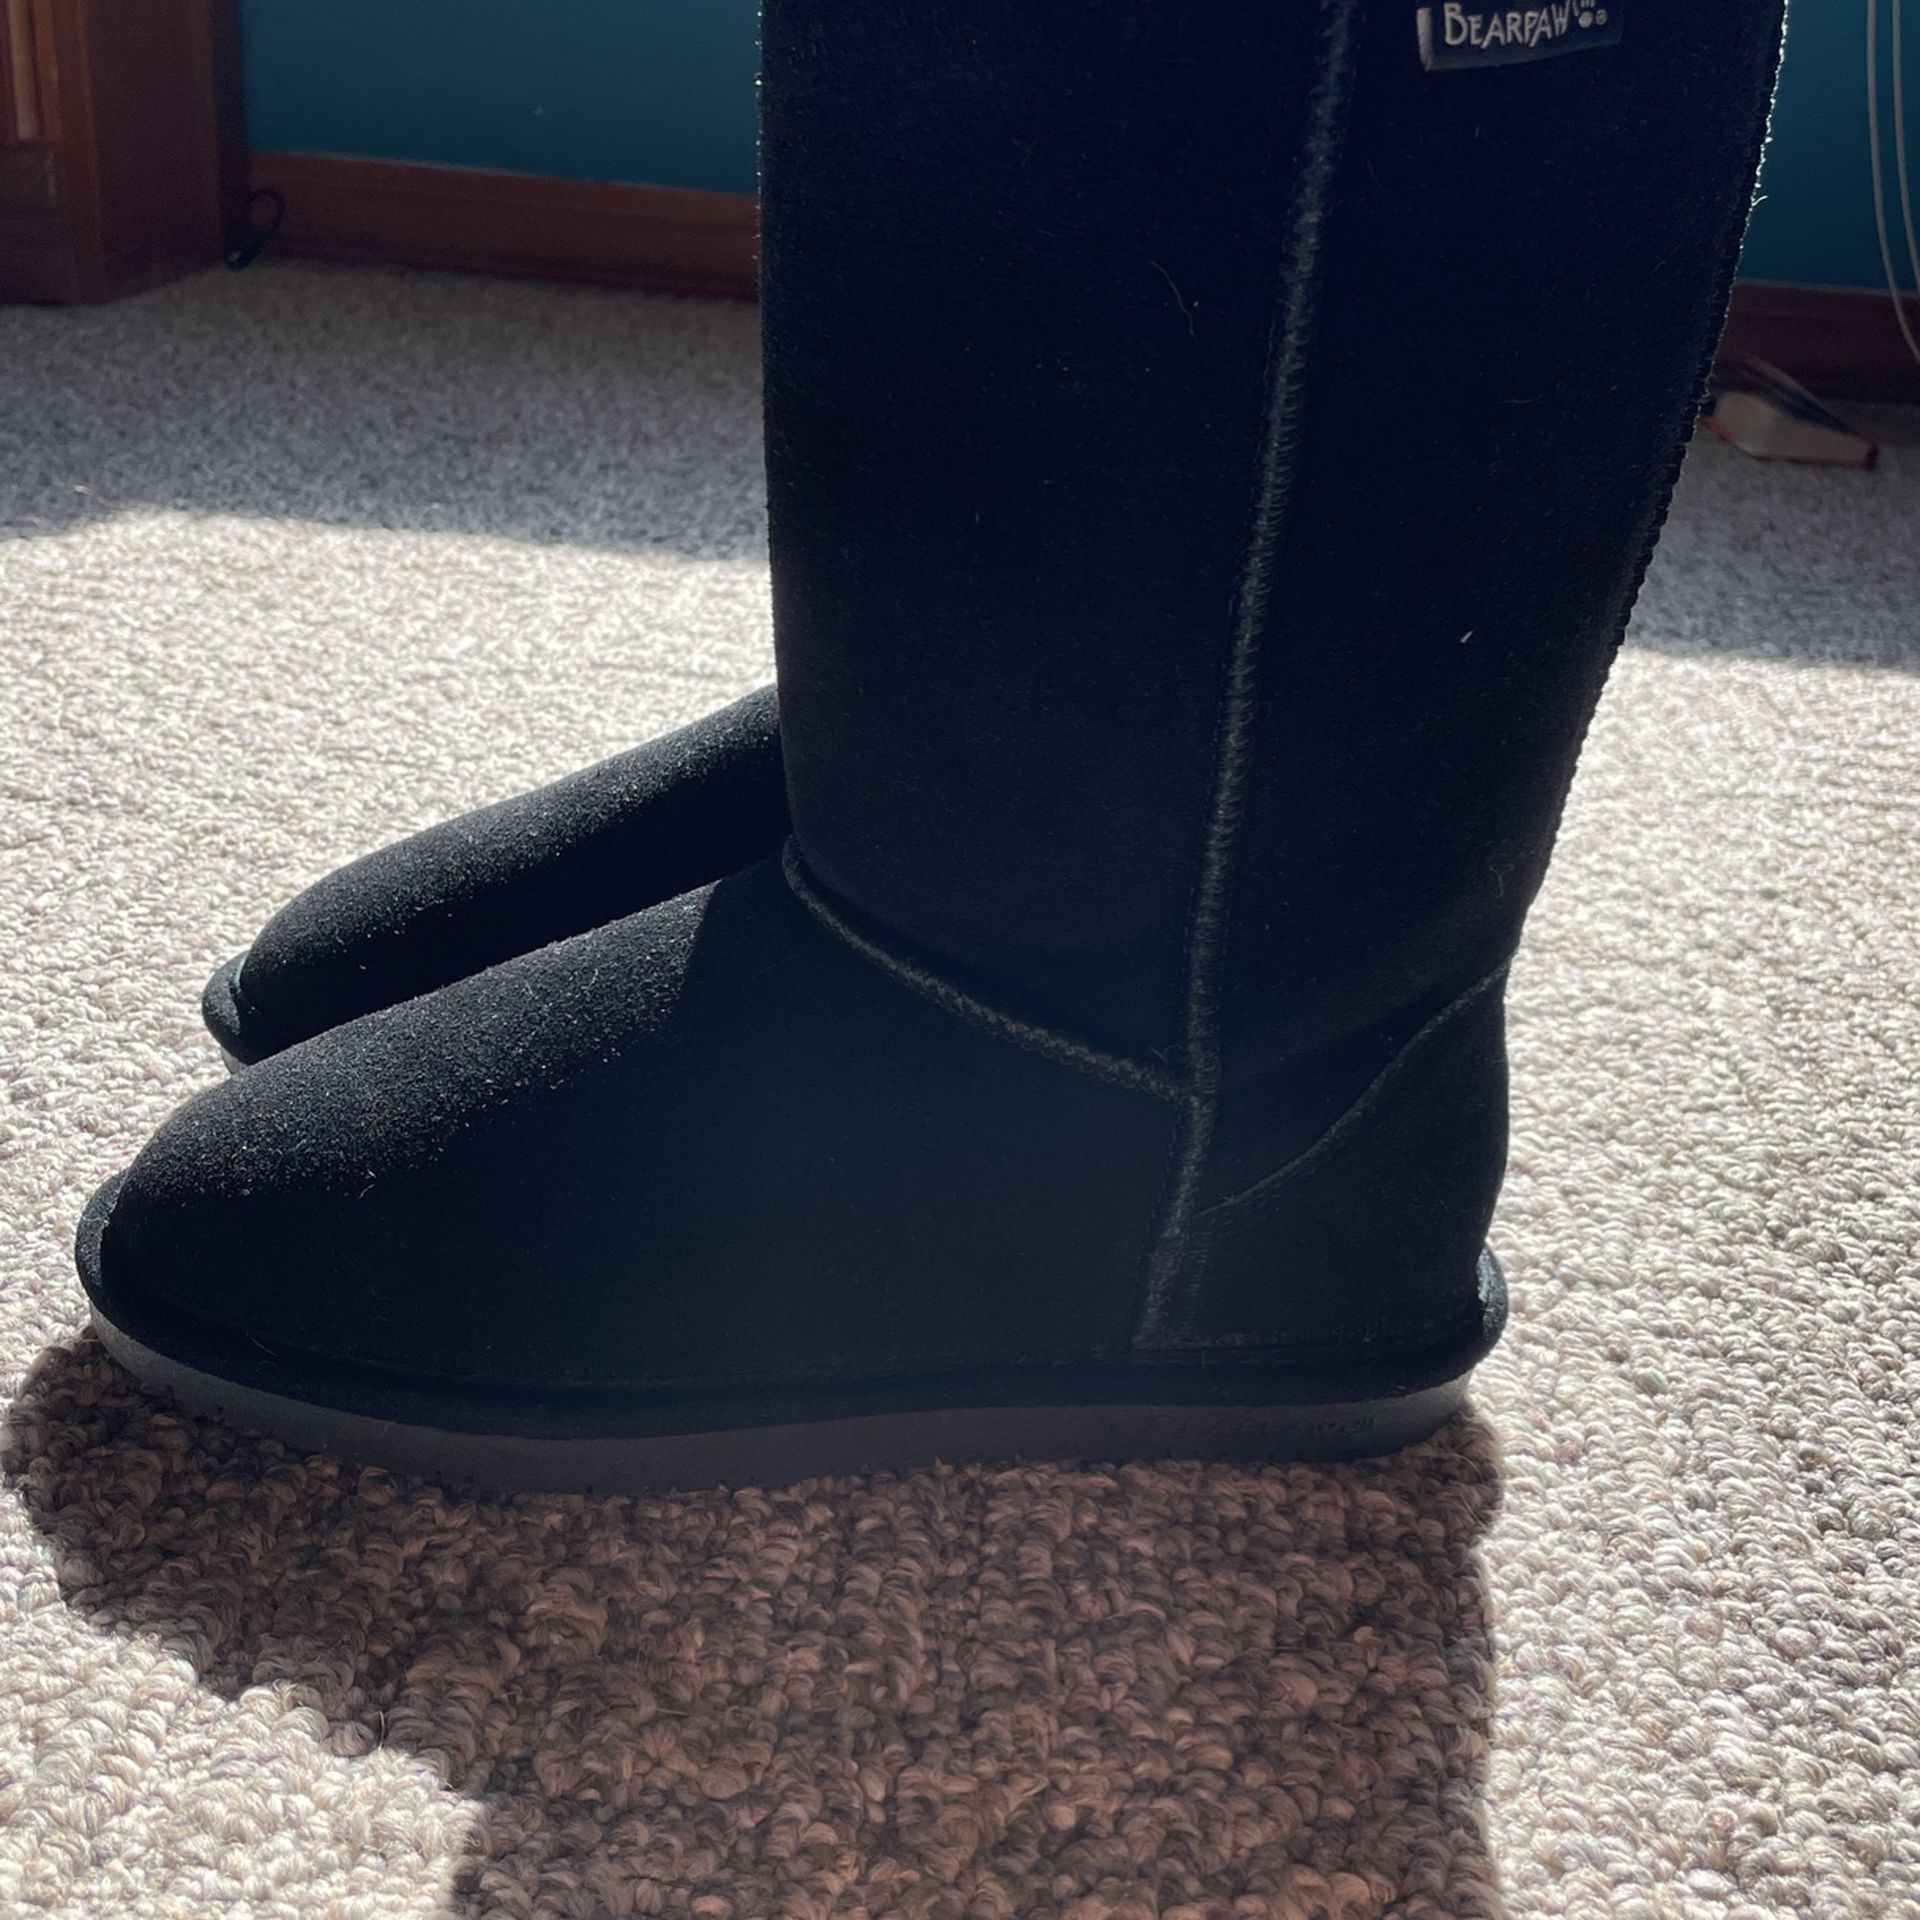 Bear paw Boots Size 9 Black